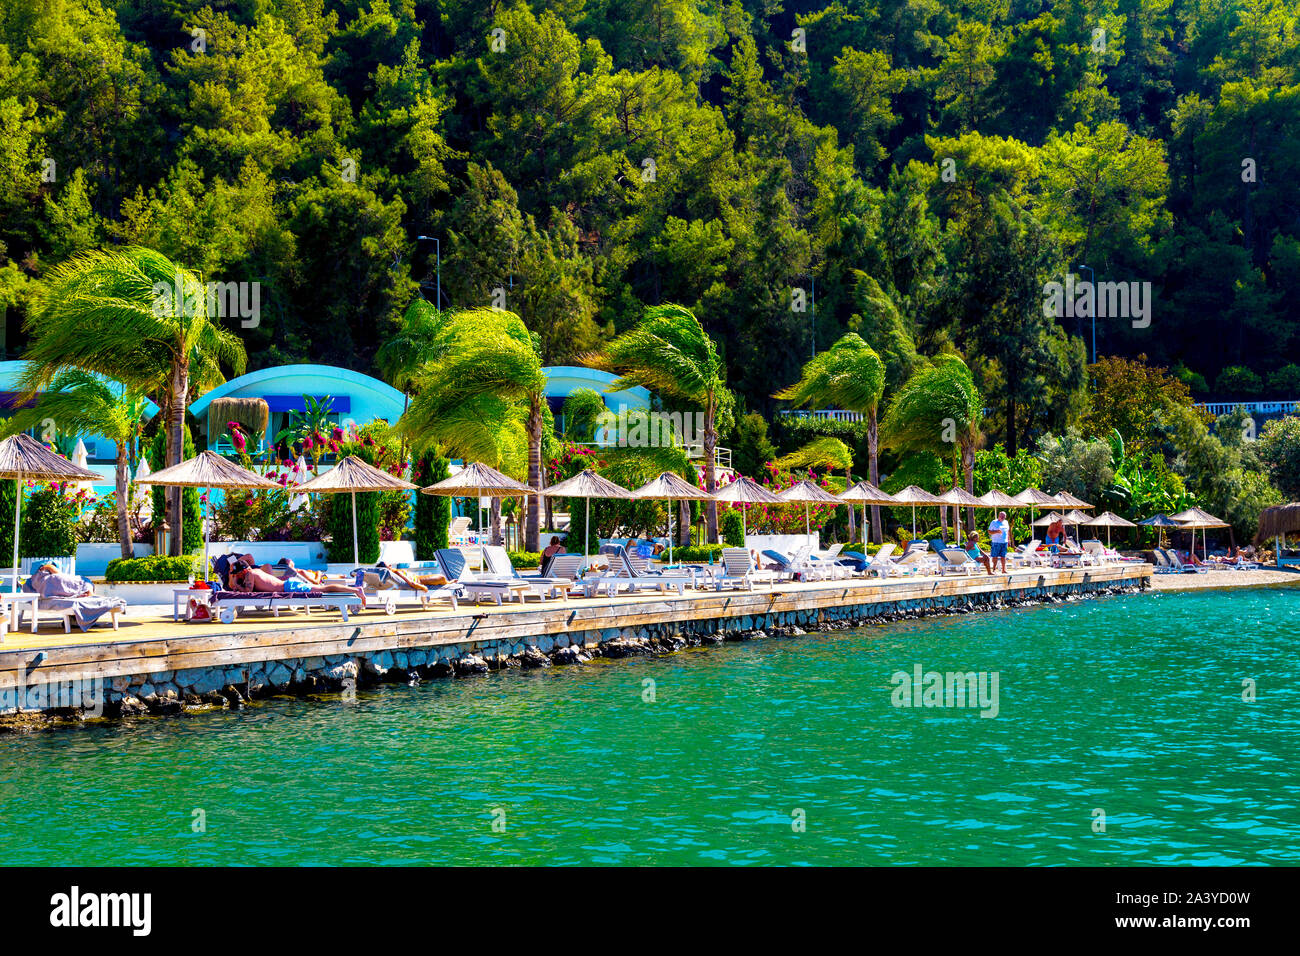 Straw parasols and sun loungers at Yacht Classic Hotel Marina, Fethiye, Turkish Riviera, Turkey Stock Photo